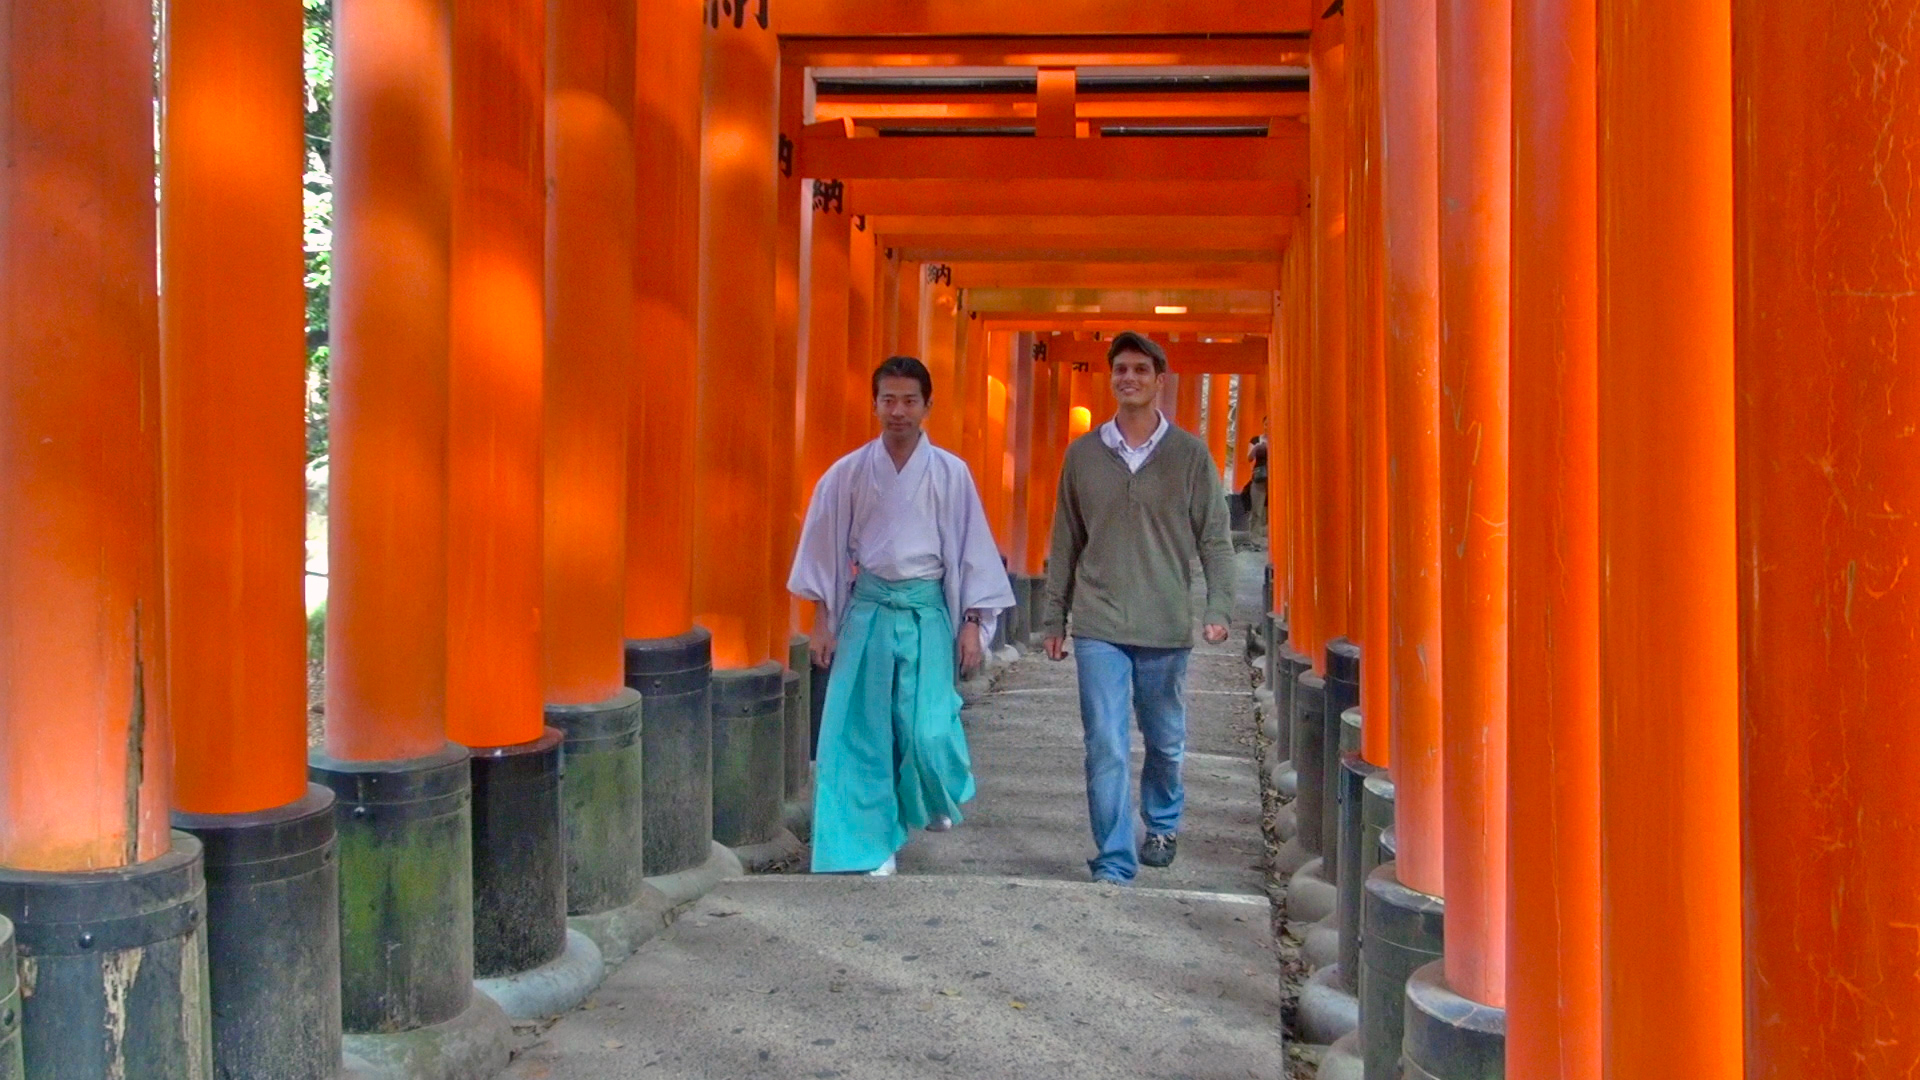 Fushimi Inari Shrine What Makes it Japan’s No Attraction